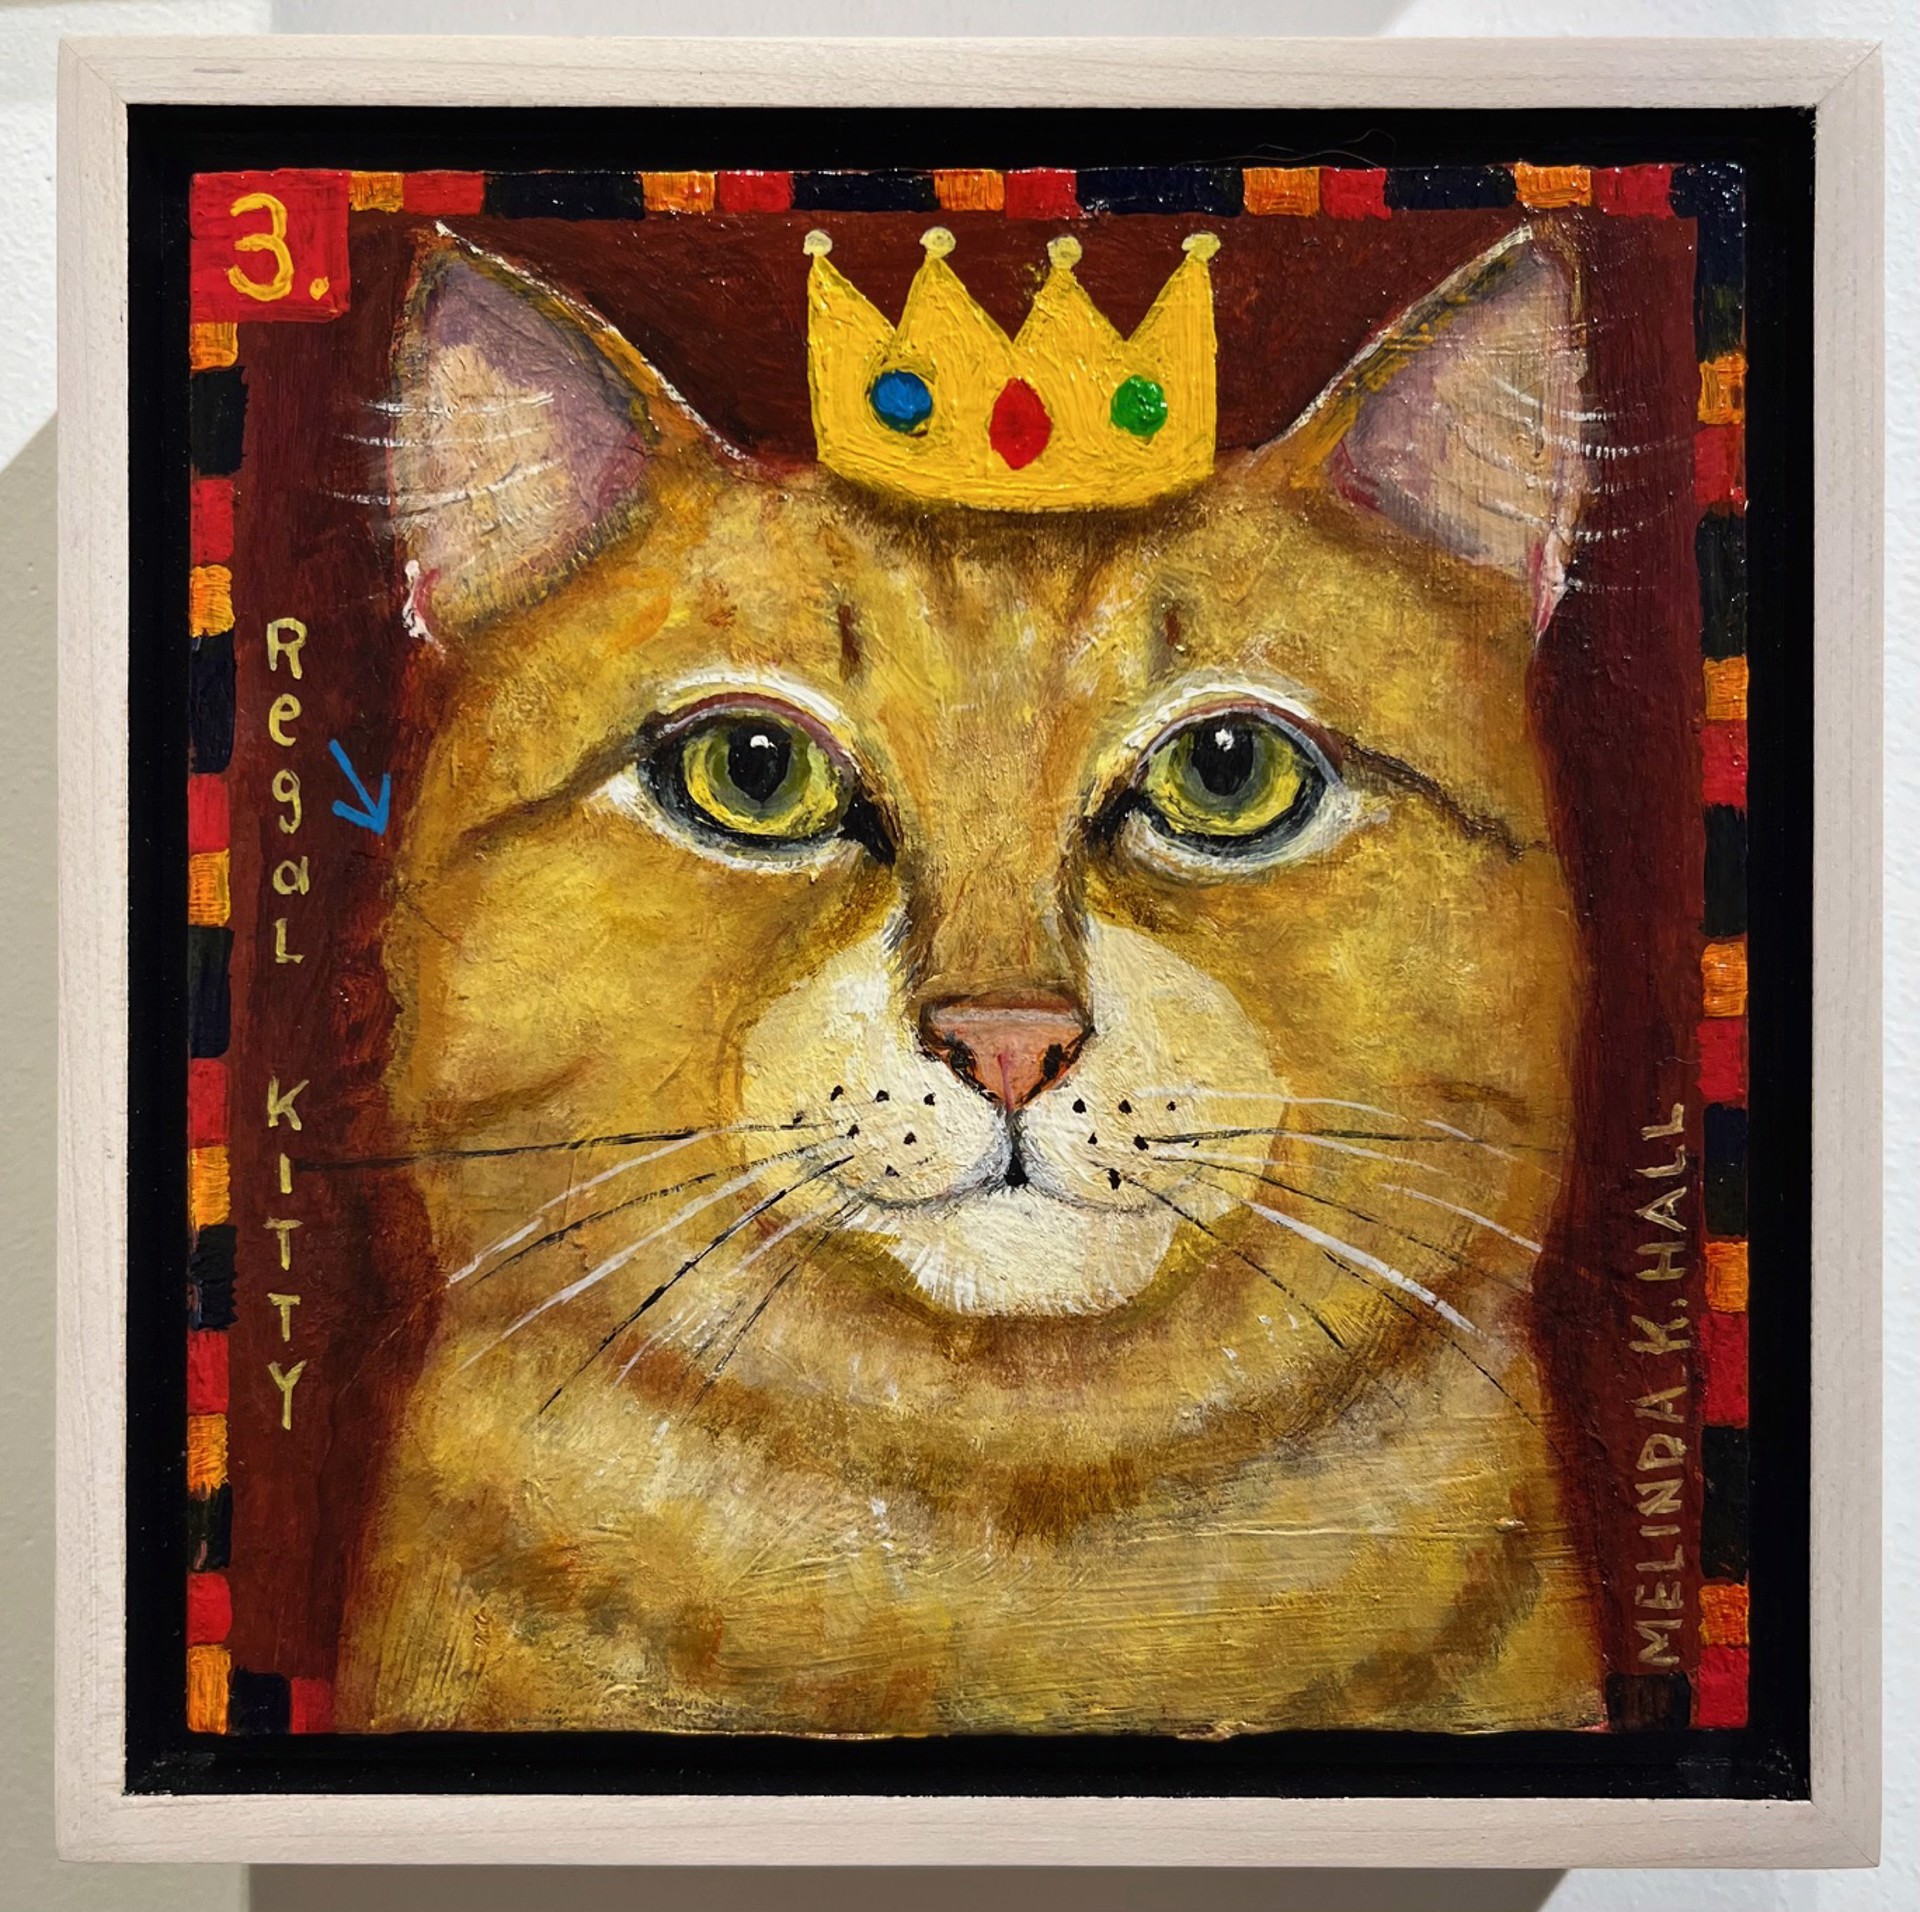 Regal Kitty #3 by Melinda K. Hall